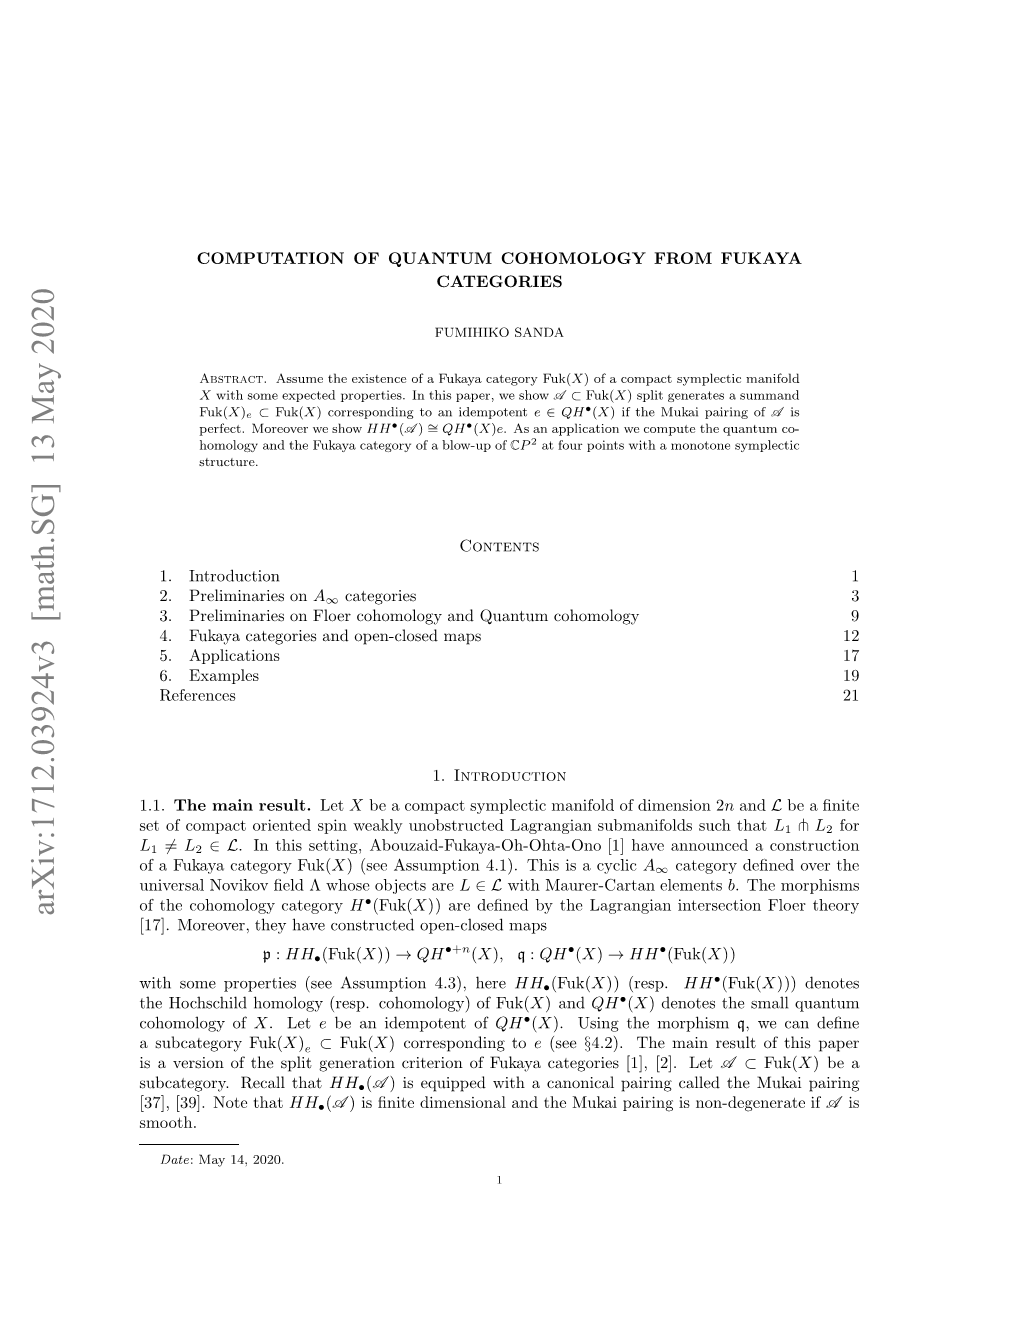 Computation of Quantum Cohomology from Fukaya Categories 2